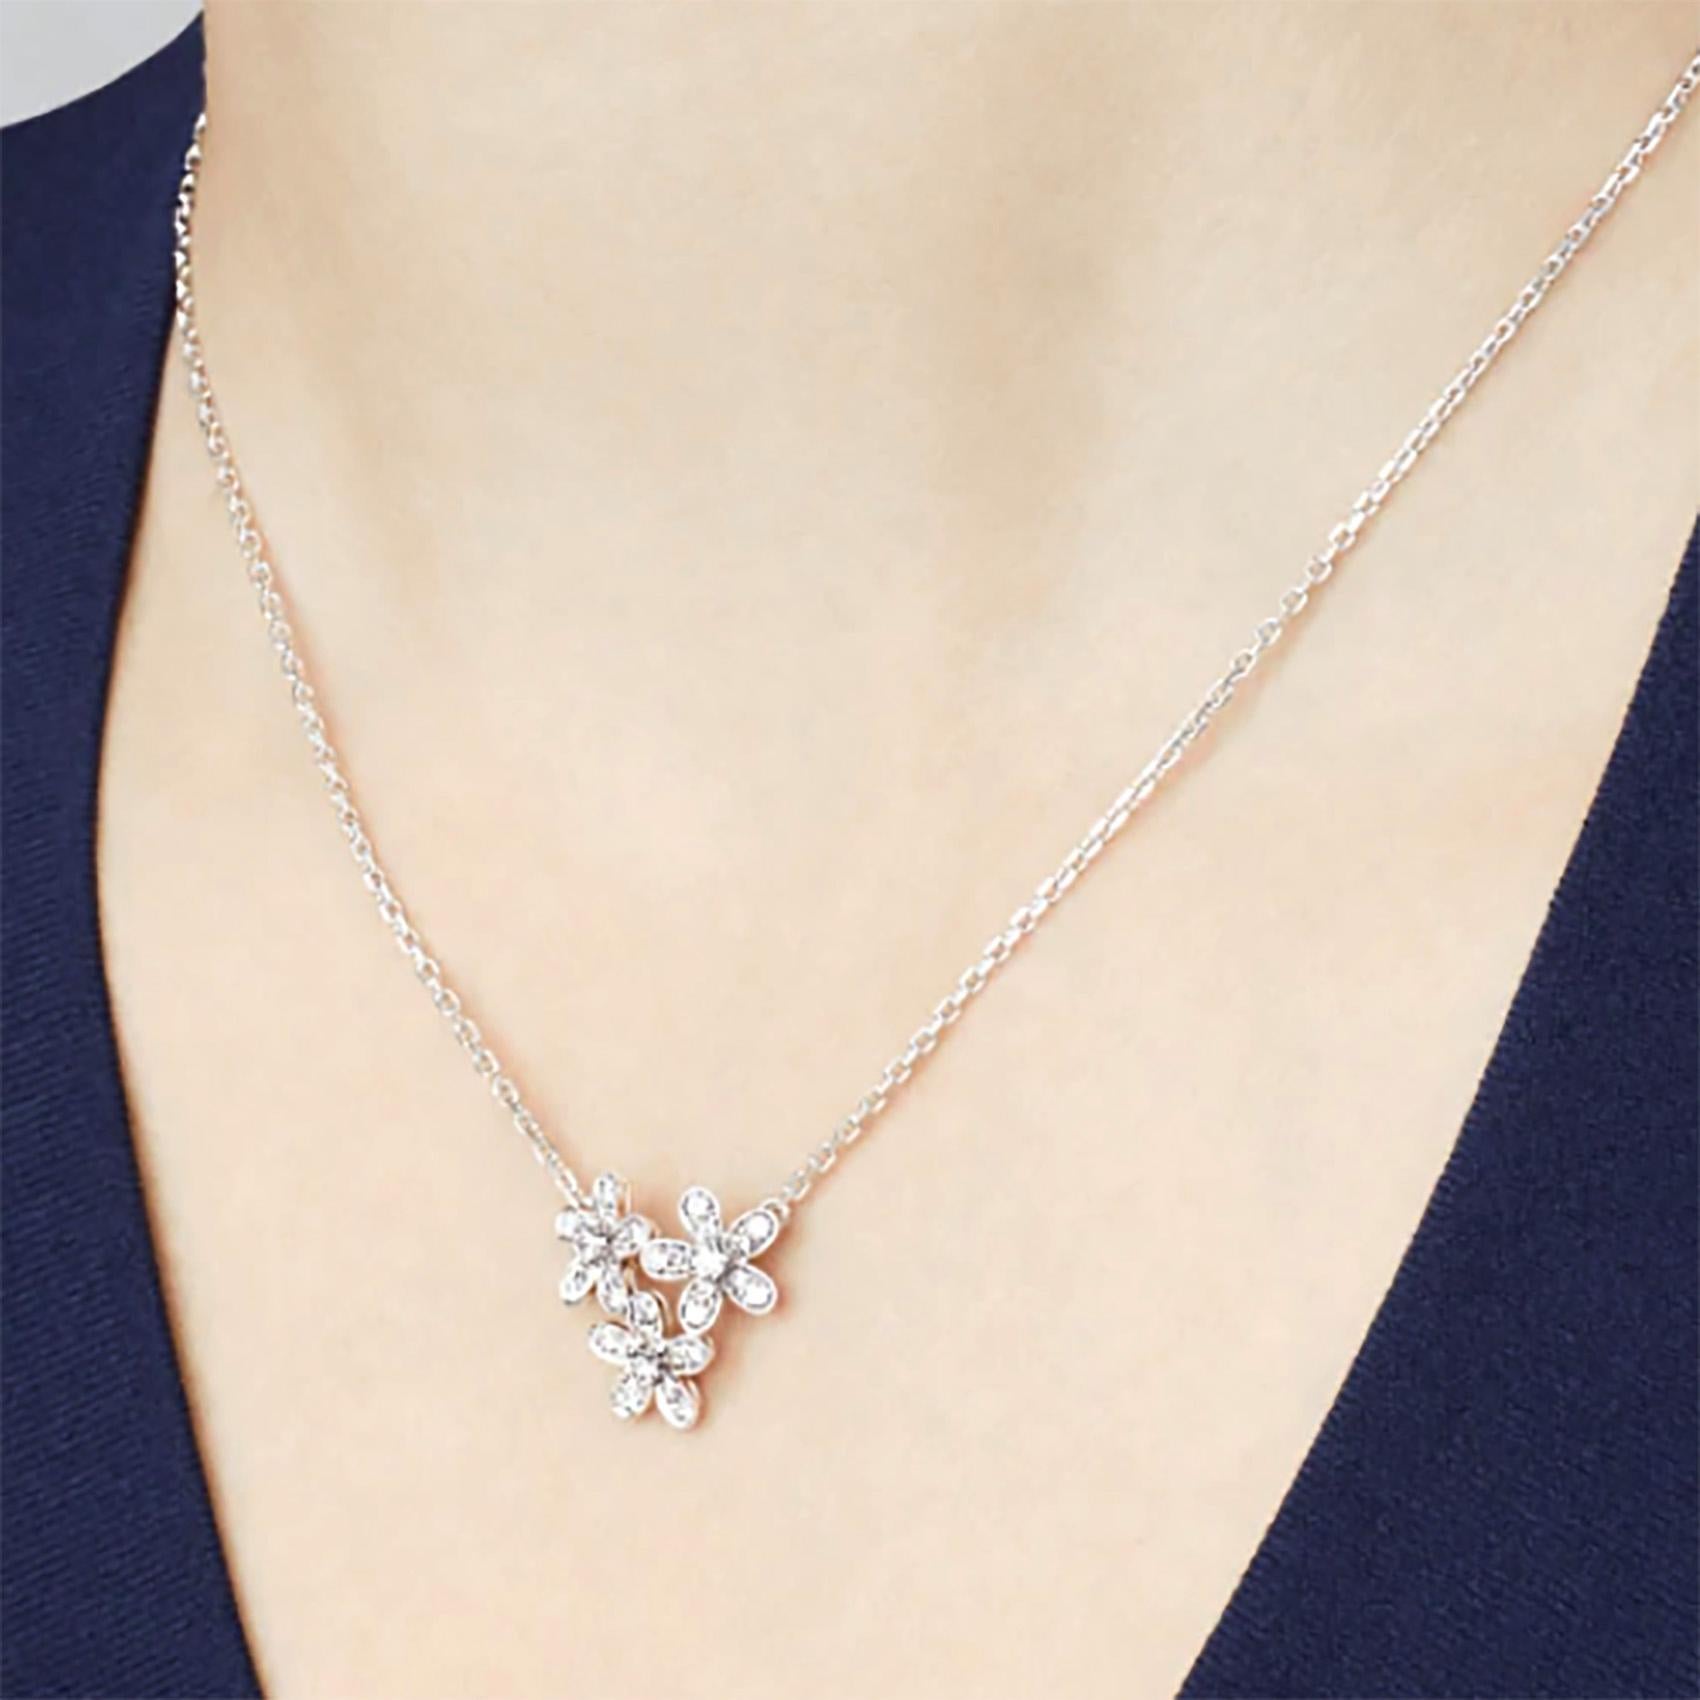 Women's or Men's Van Cleef & Arpels Socrates 3 Flower Diamond Pendant Necklace in White Gold